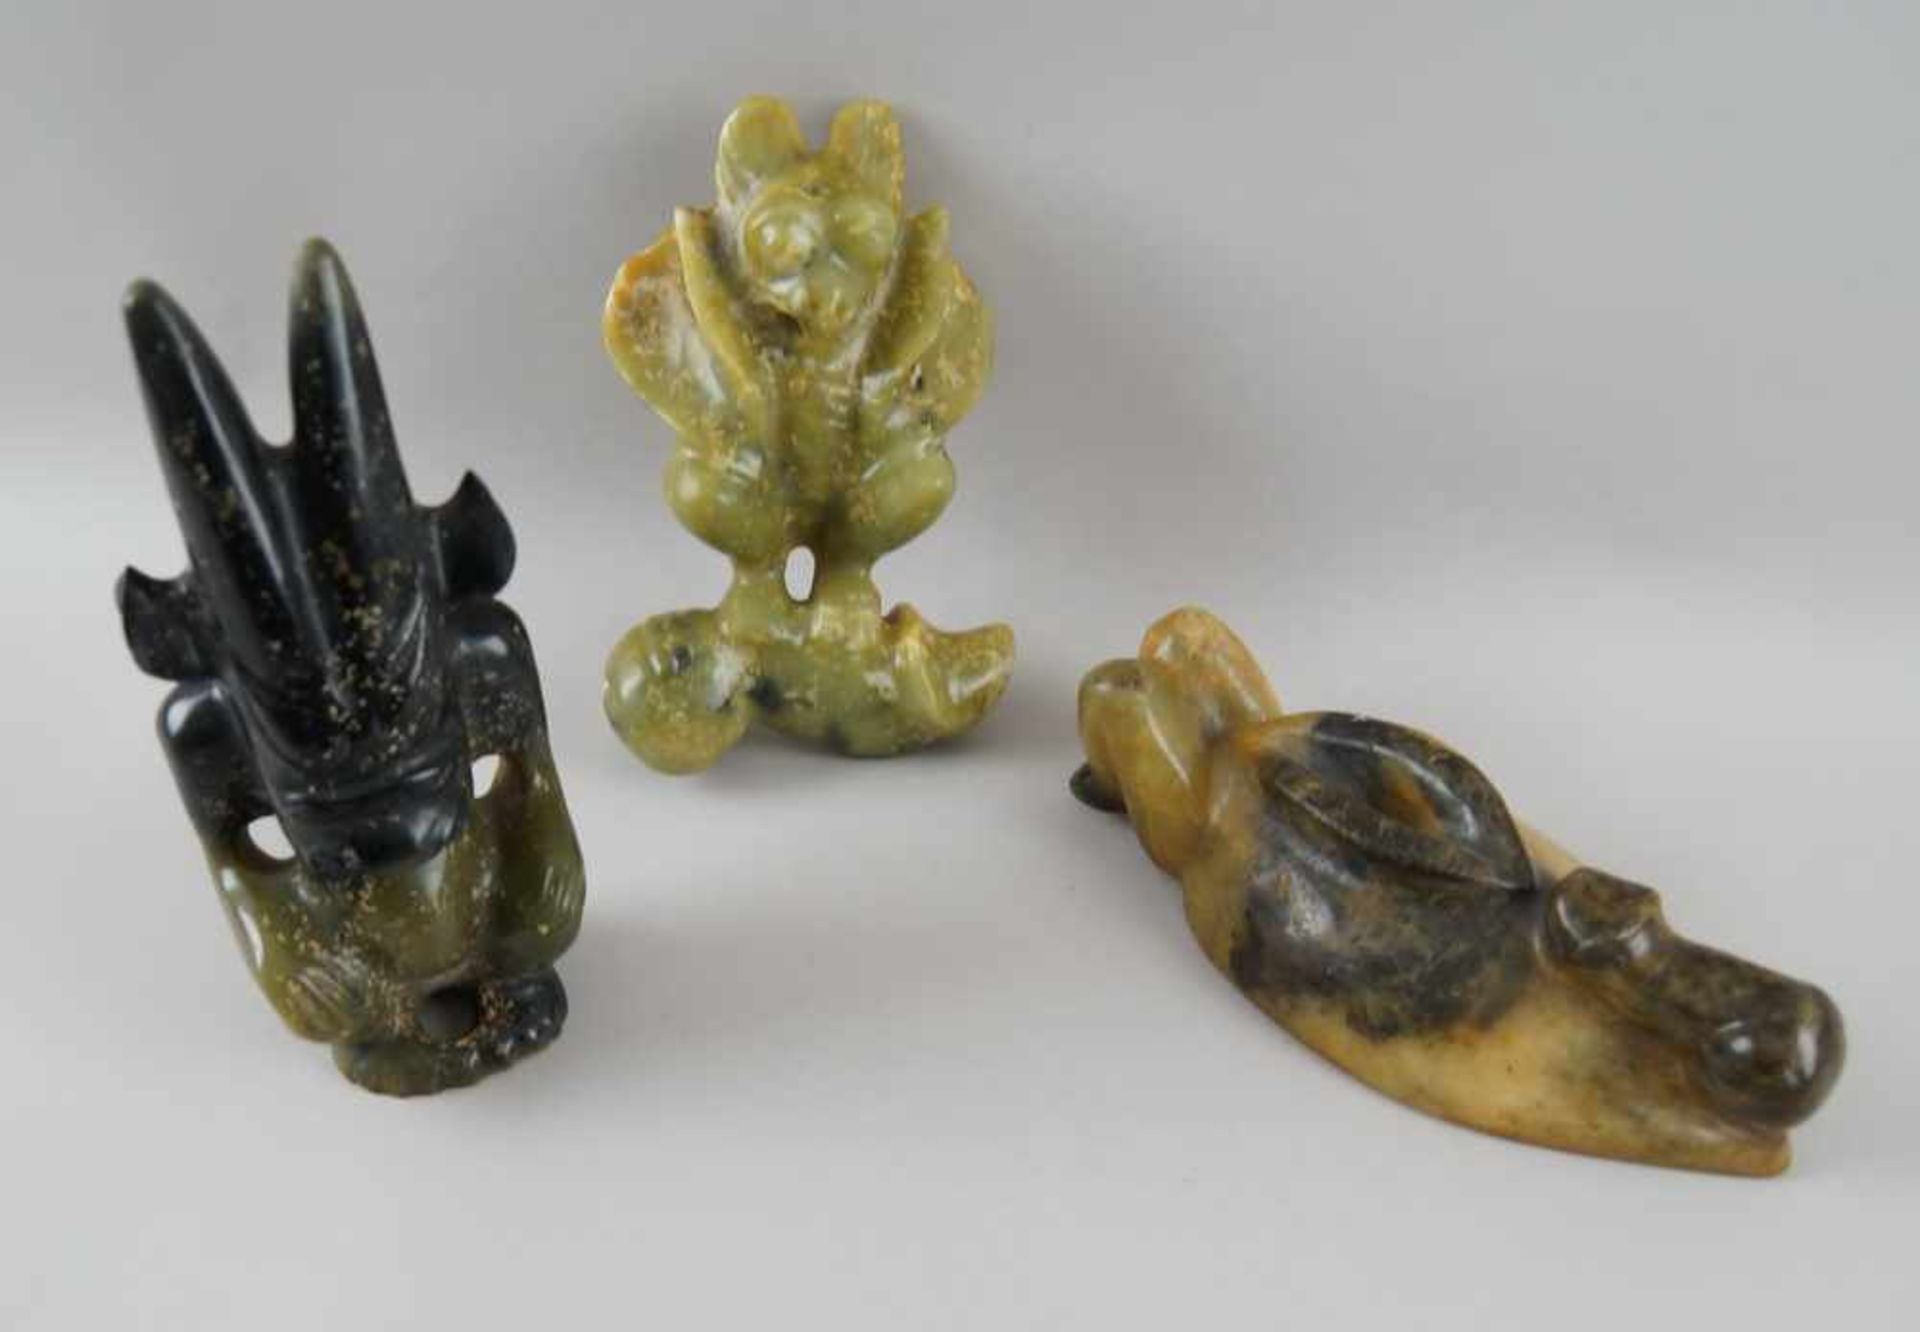 Drei verschiedene Ritualskulpturen / Phallusskulpturen, Stein/Marmor geschnitzt, 20-24 cm - Bild 2 aus 5